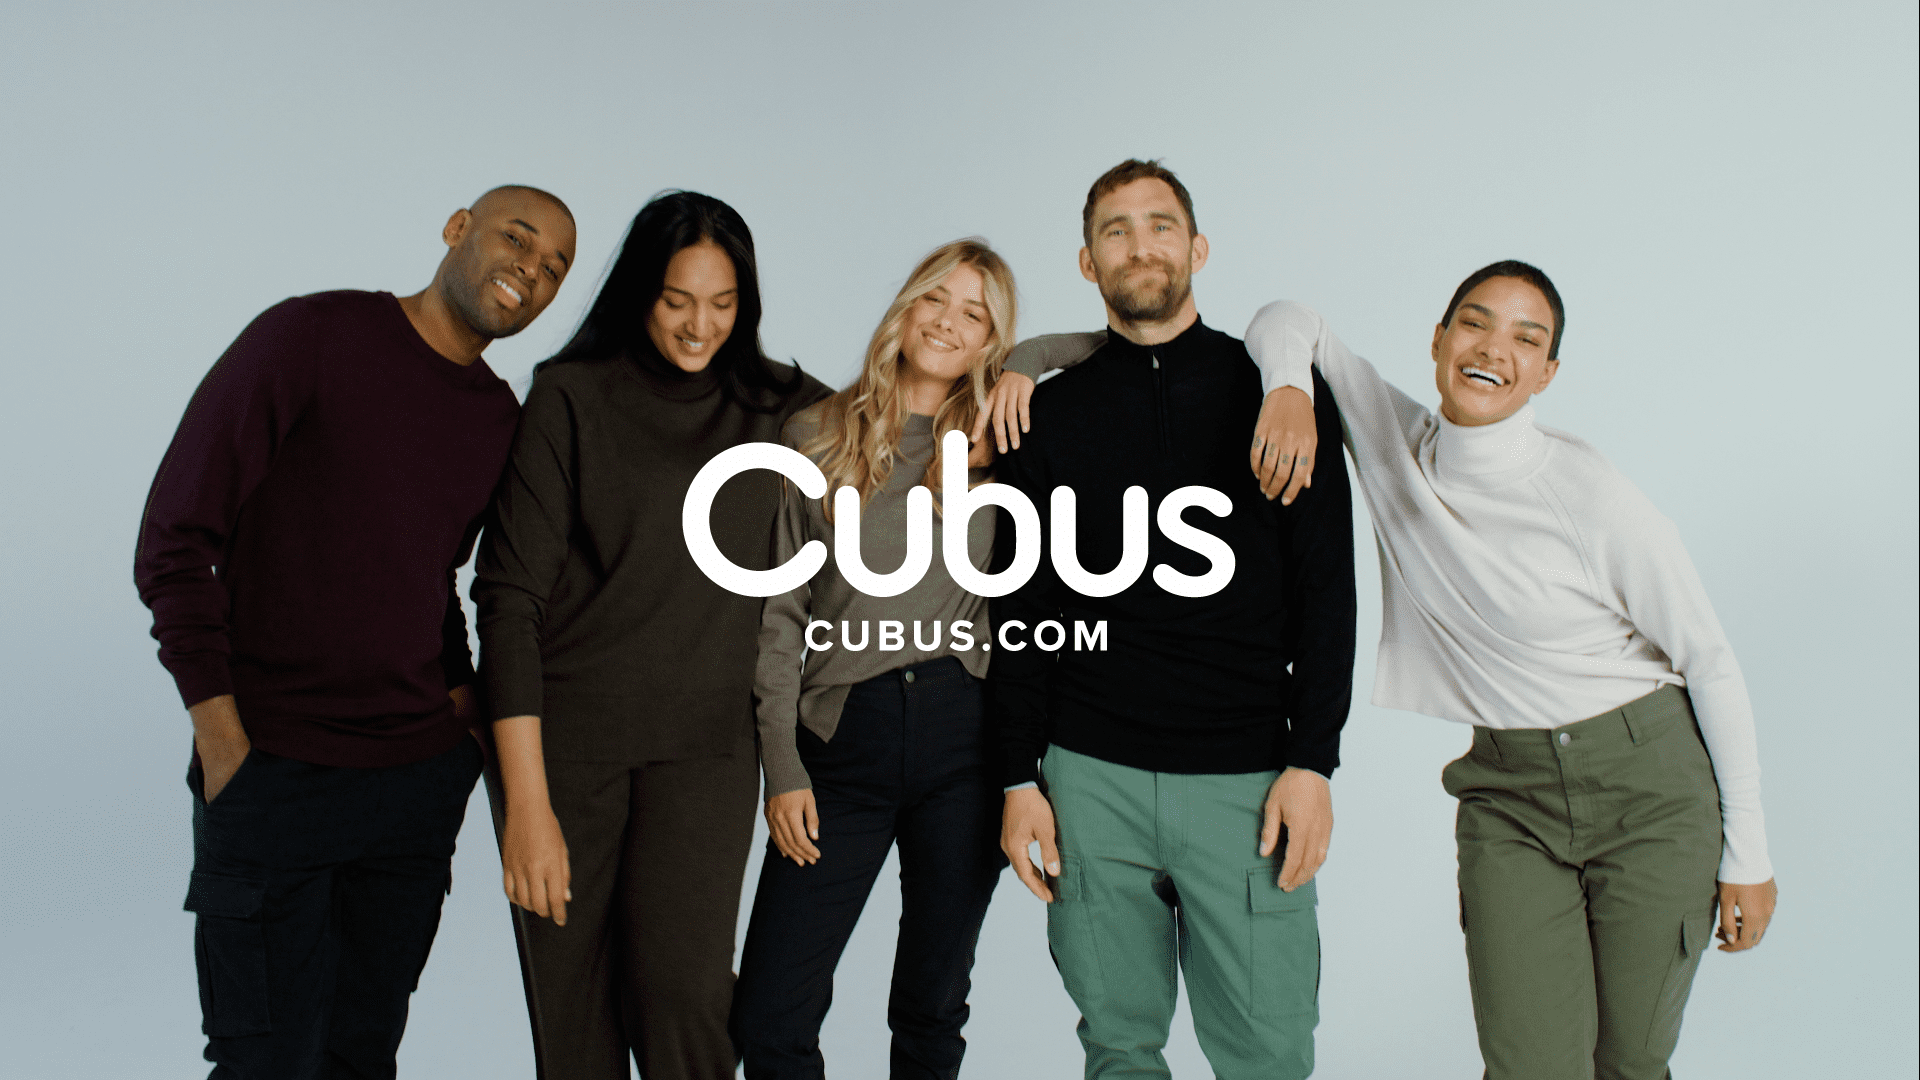 Cubus Commercial Image Twenty Studios